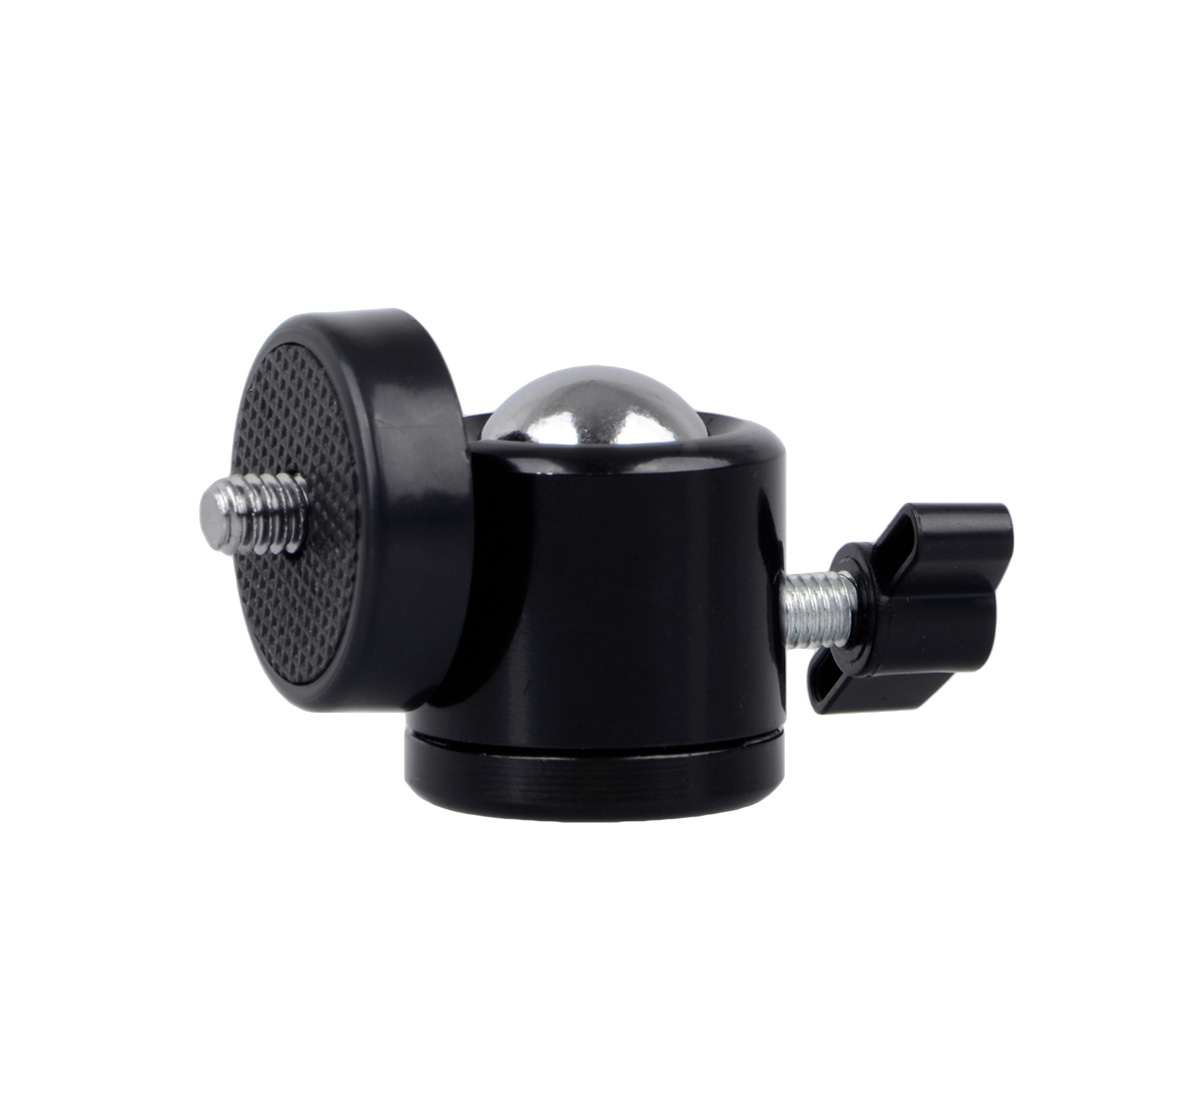 Mini Kugelkopf für Kamera-Blitzschuh TM-12